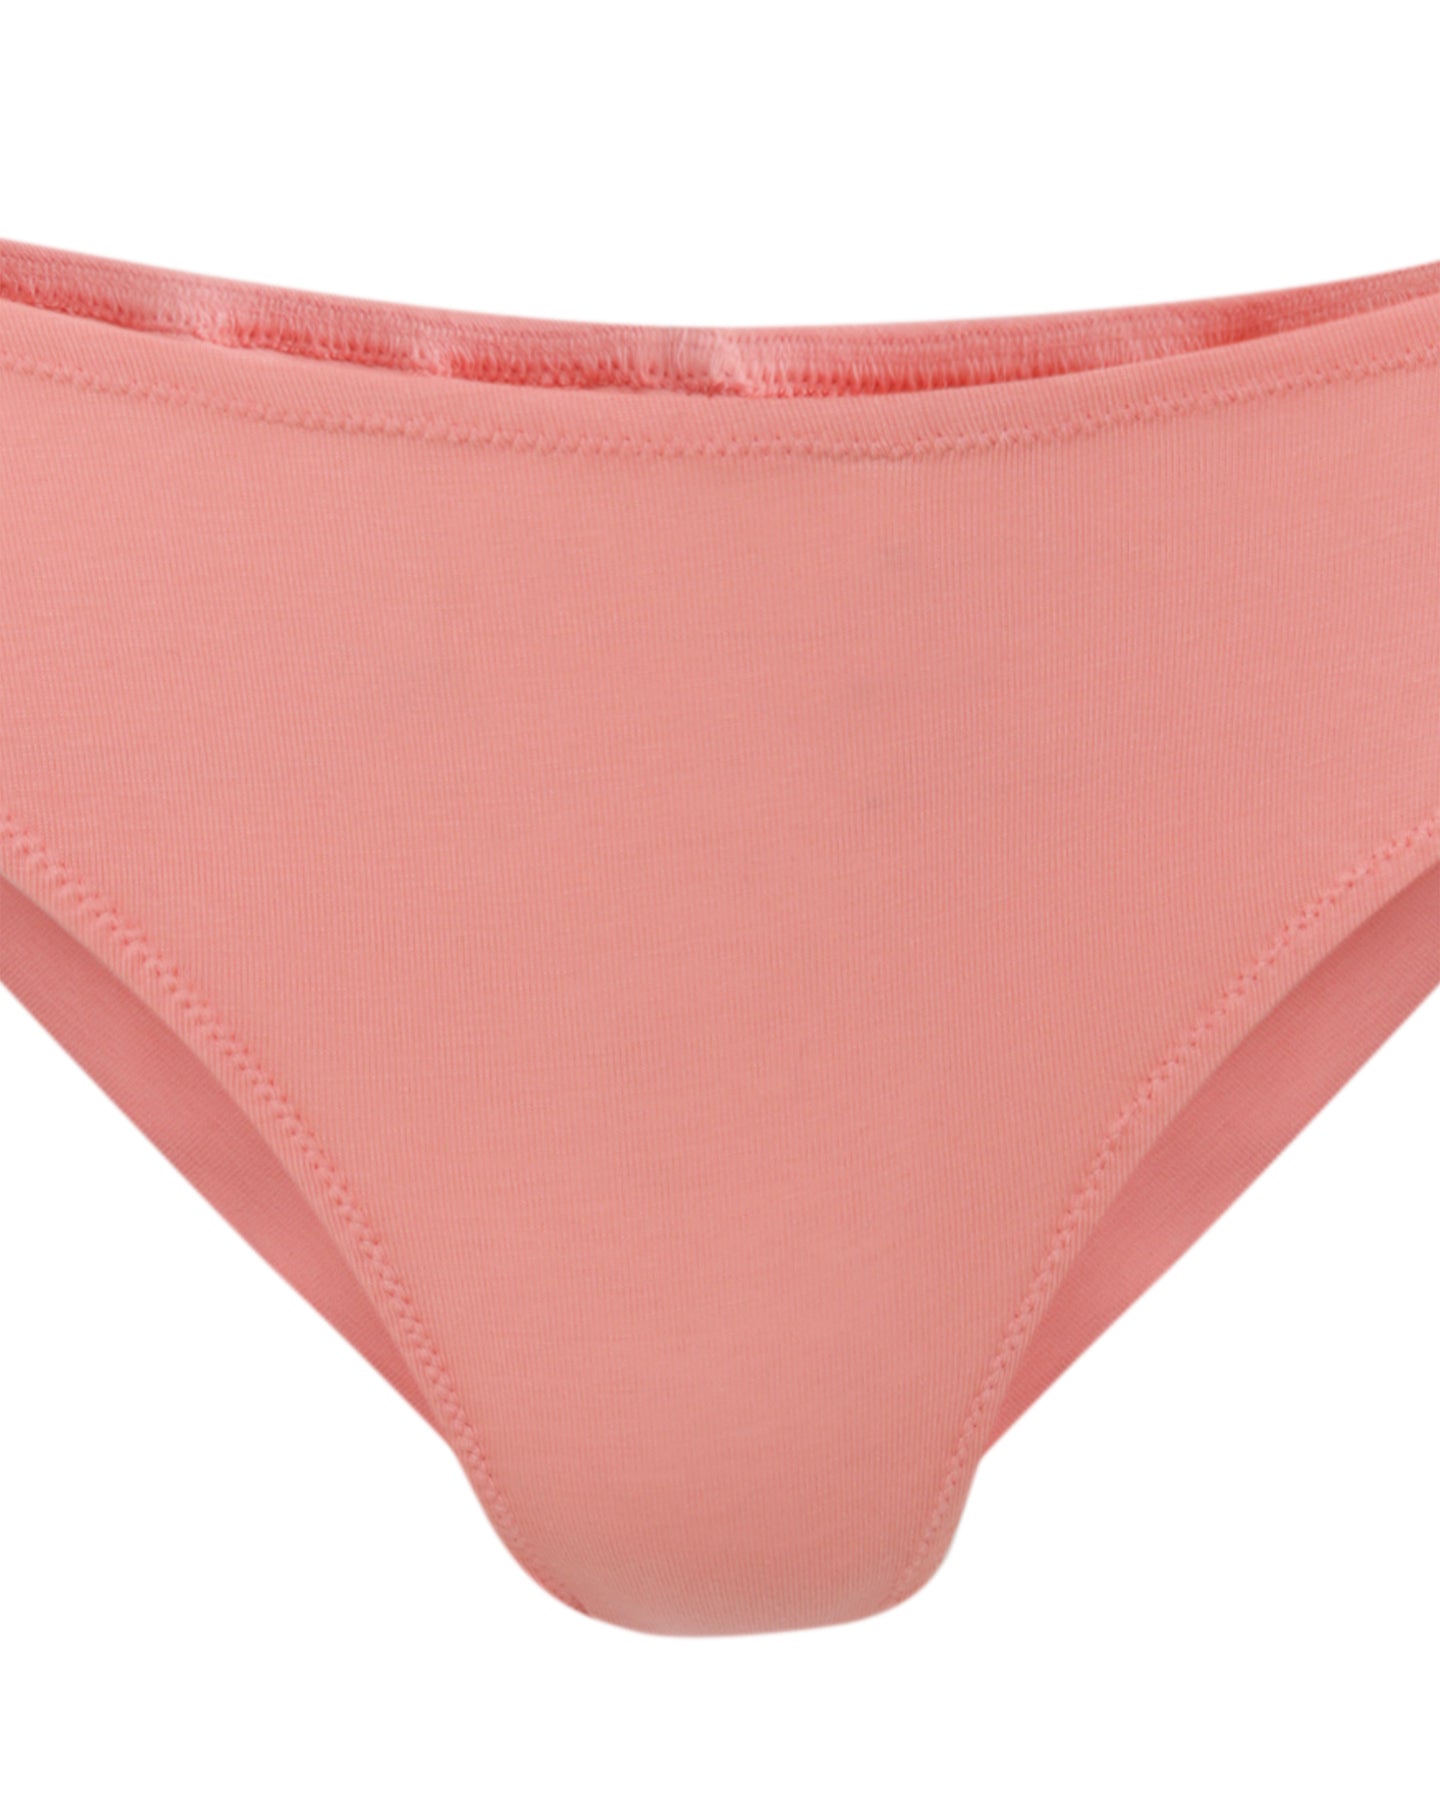 Cajsa | Organic Sexy Lingerie Women's Underwear High-Waisted Thong